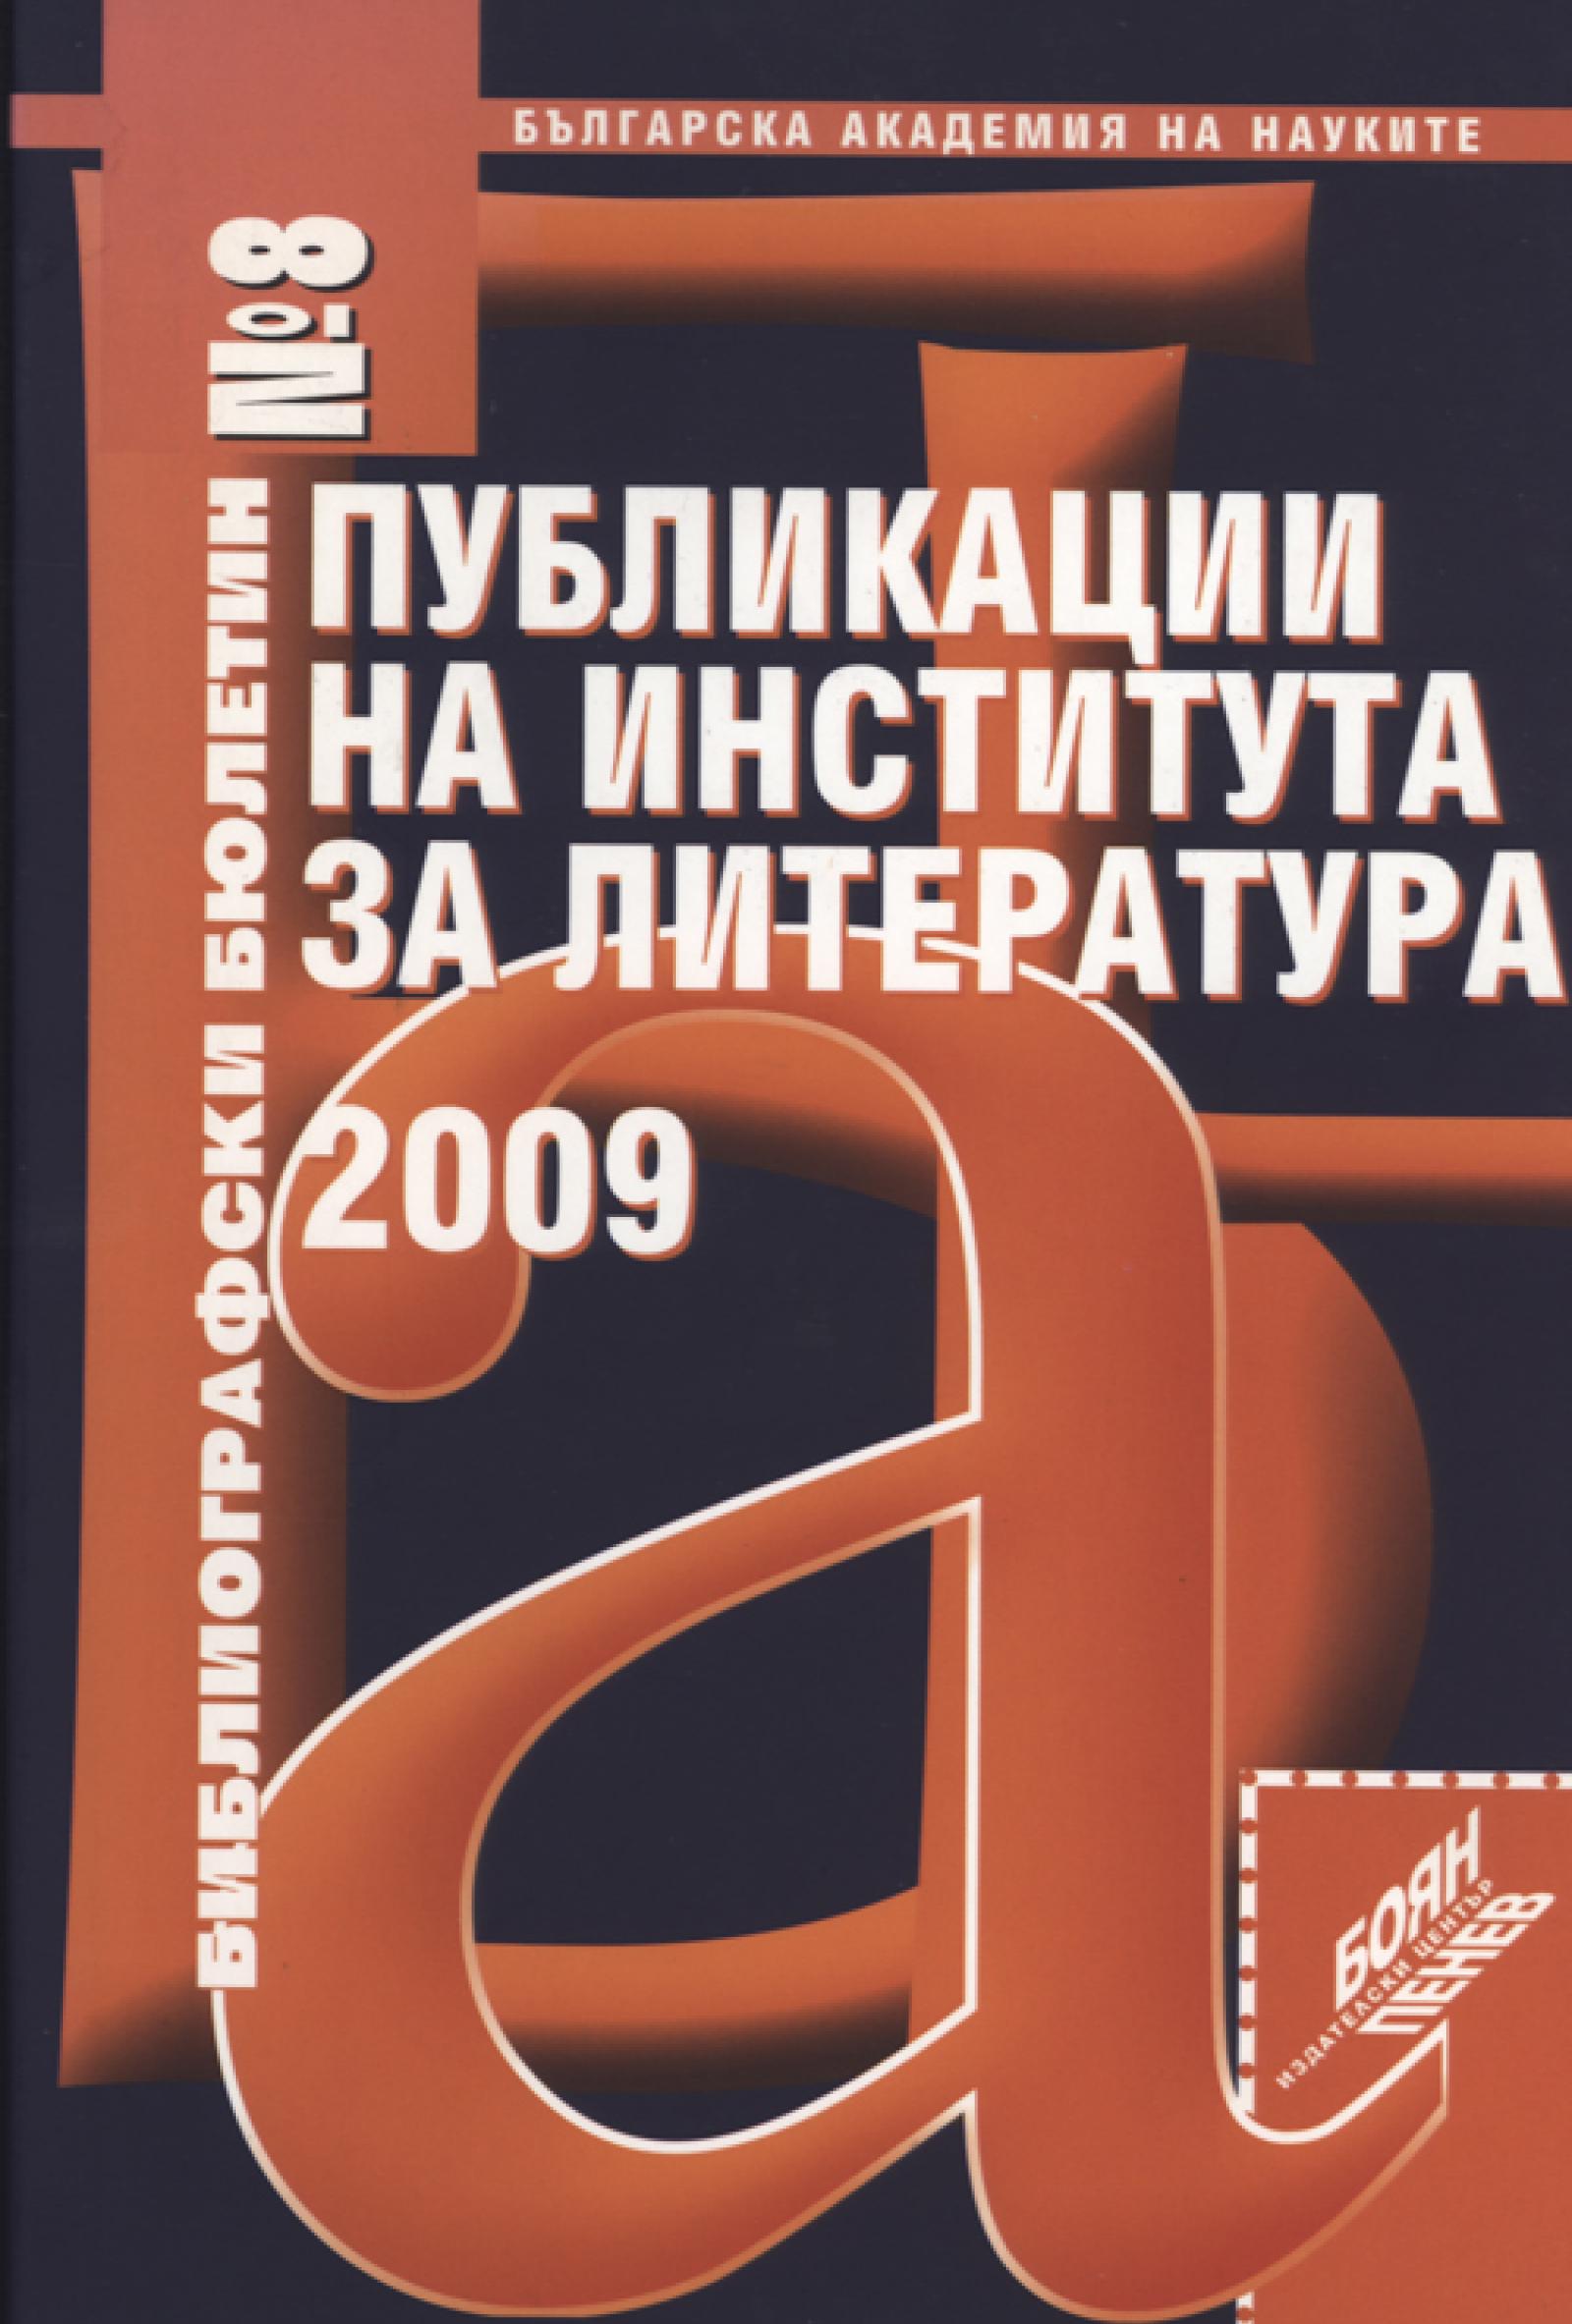 Publications_2009.jpg 